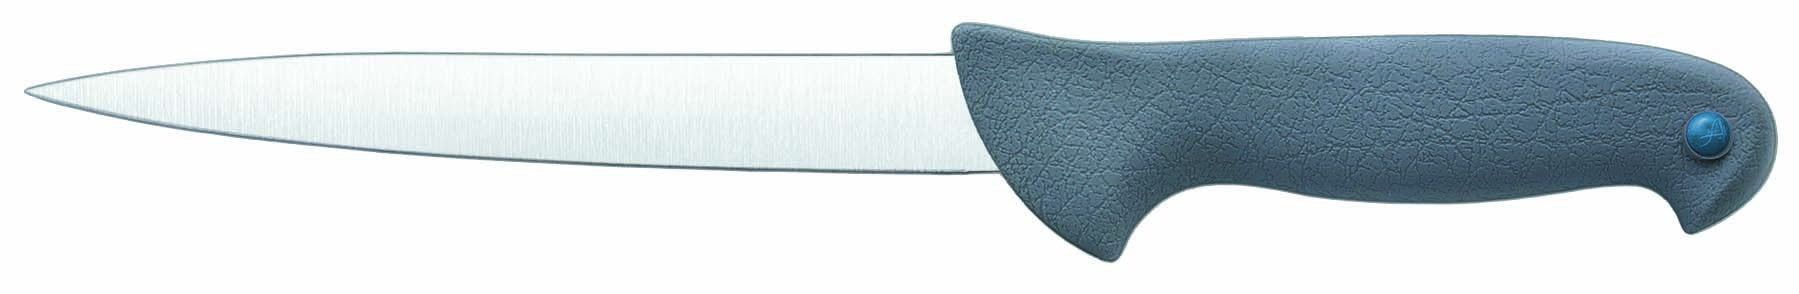 Cuchillo para Filetear Colour Prof 17 cm